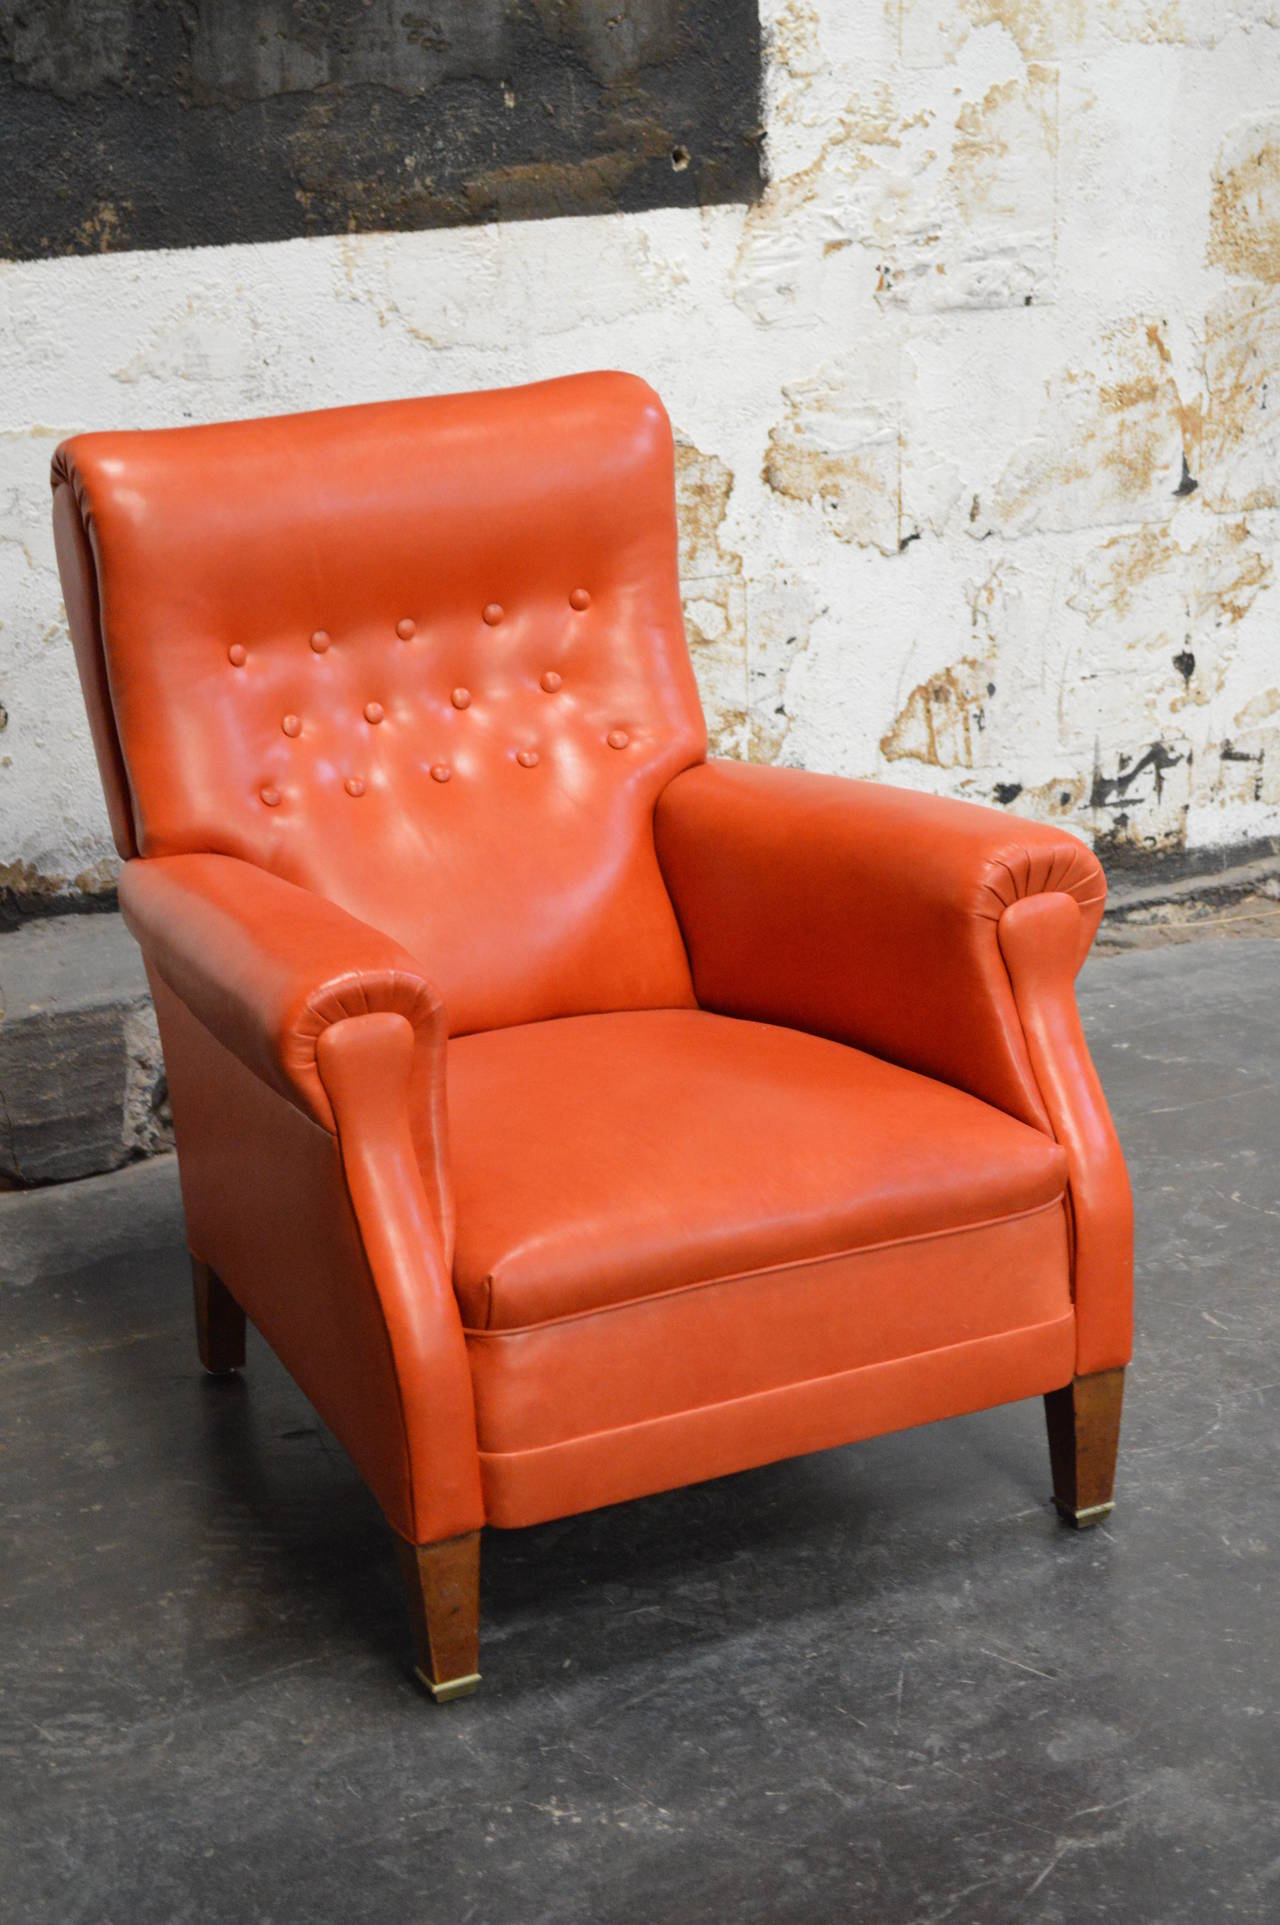 orange vintage chair